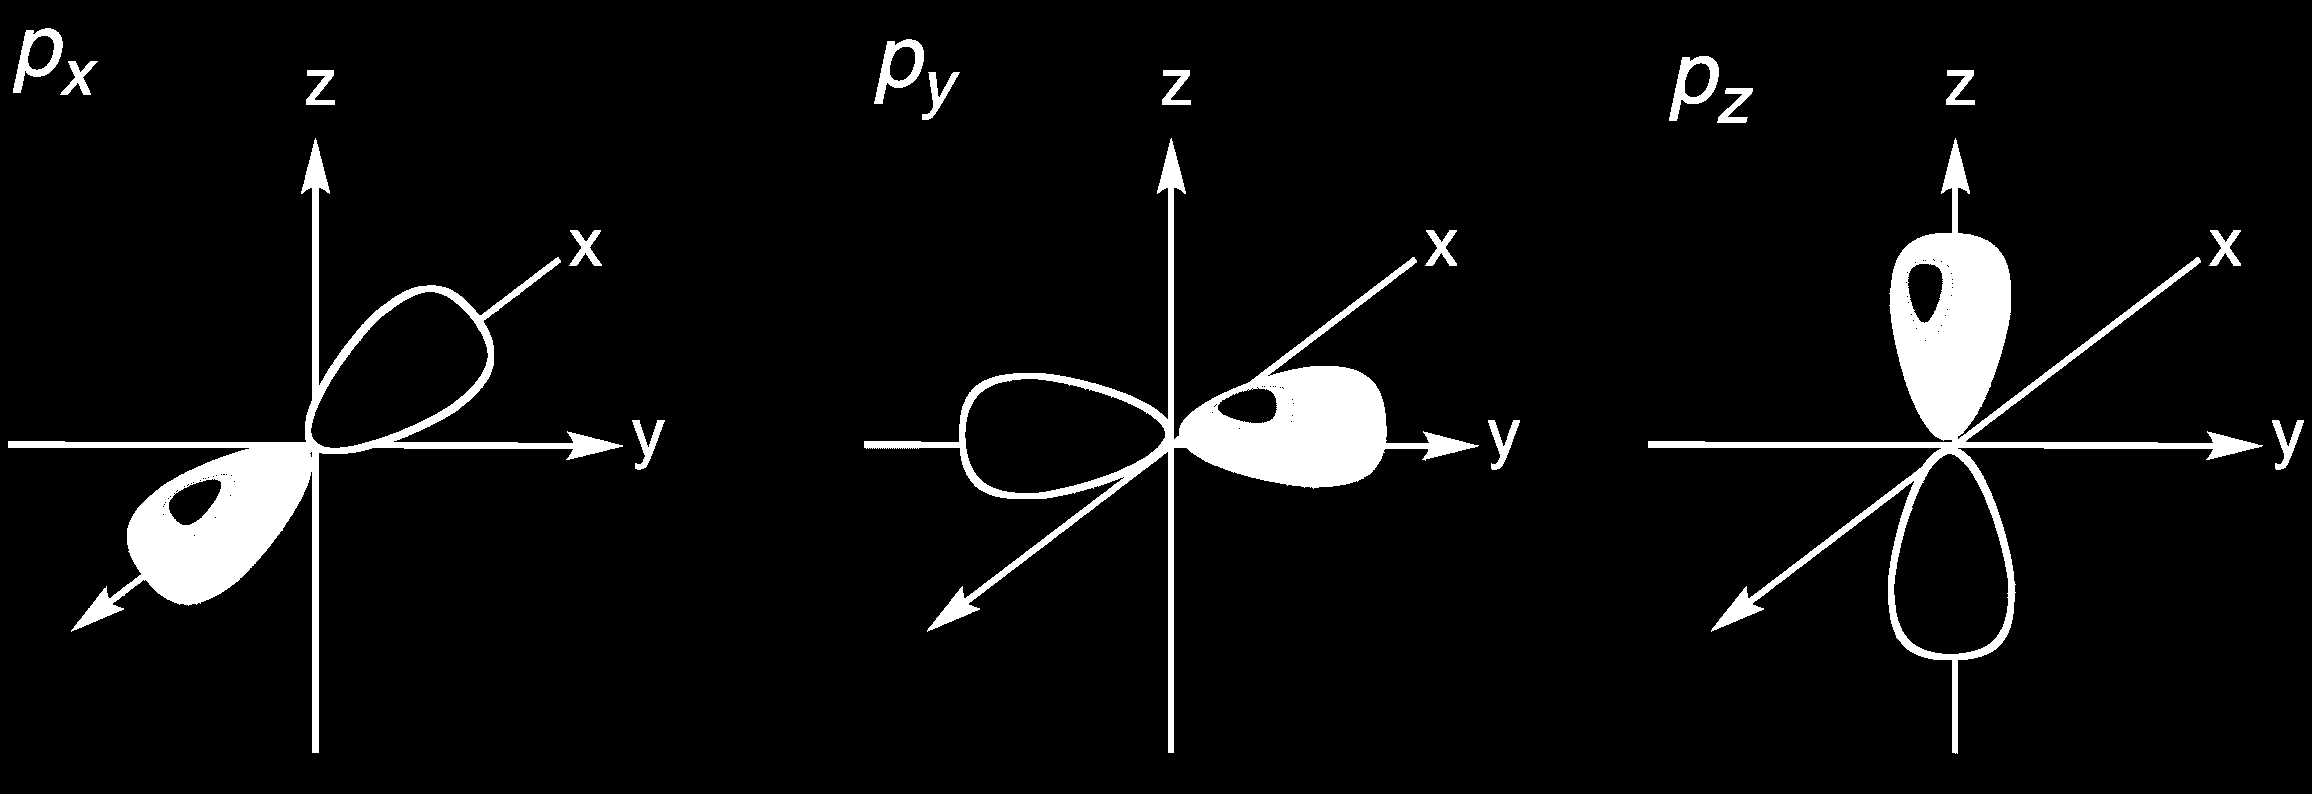 p Τροχιακά Τα τροχιακά p x και p y έχουν το ίδιο σχήμα με το τροχιακό p z, αλλά η διεύθυνσή τους είναι κατά μήκος των αξόνων x και y, αντίστοιχα.